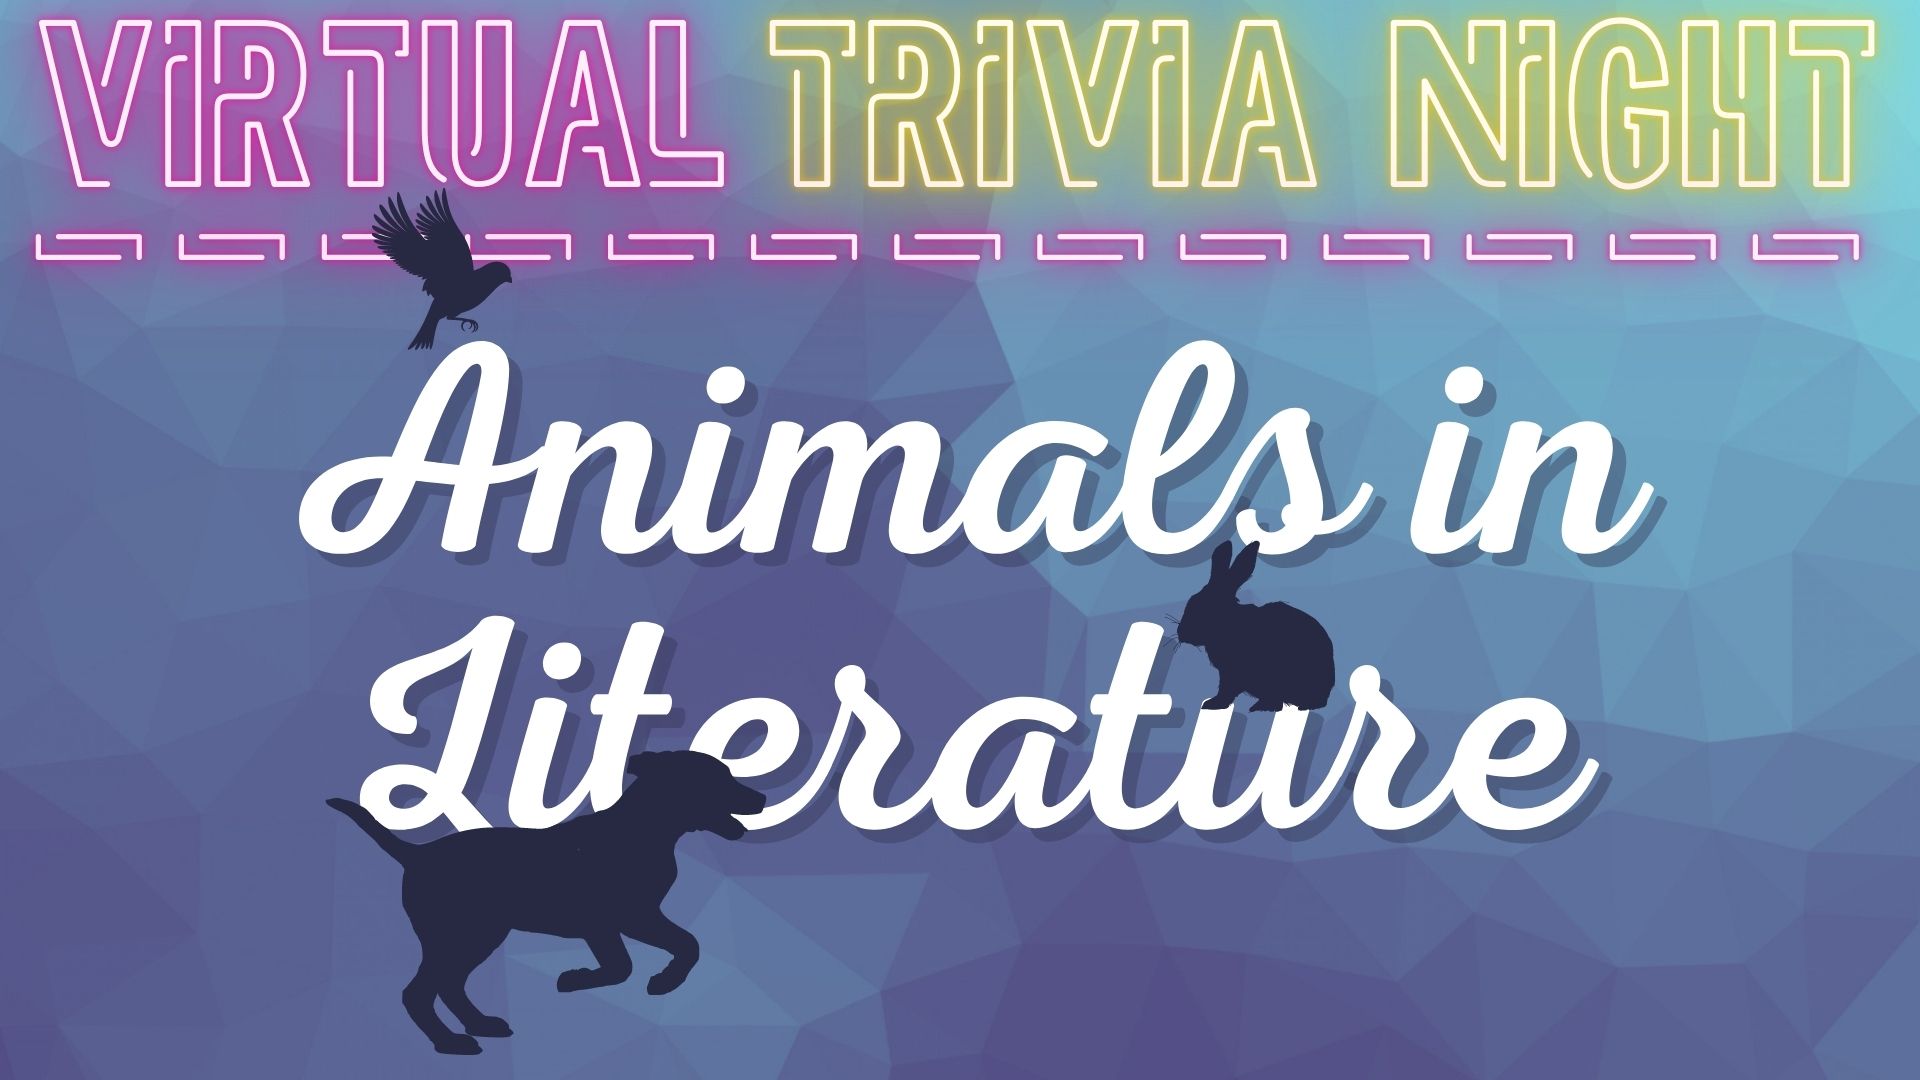 Virtual Trivia Night: Animals in Literature